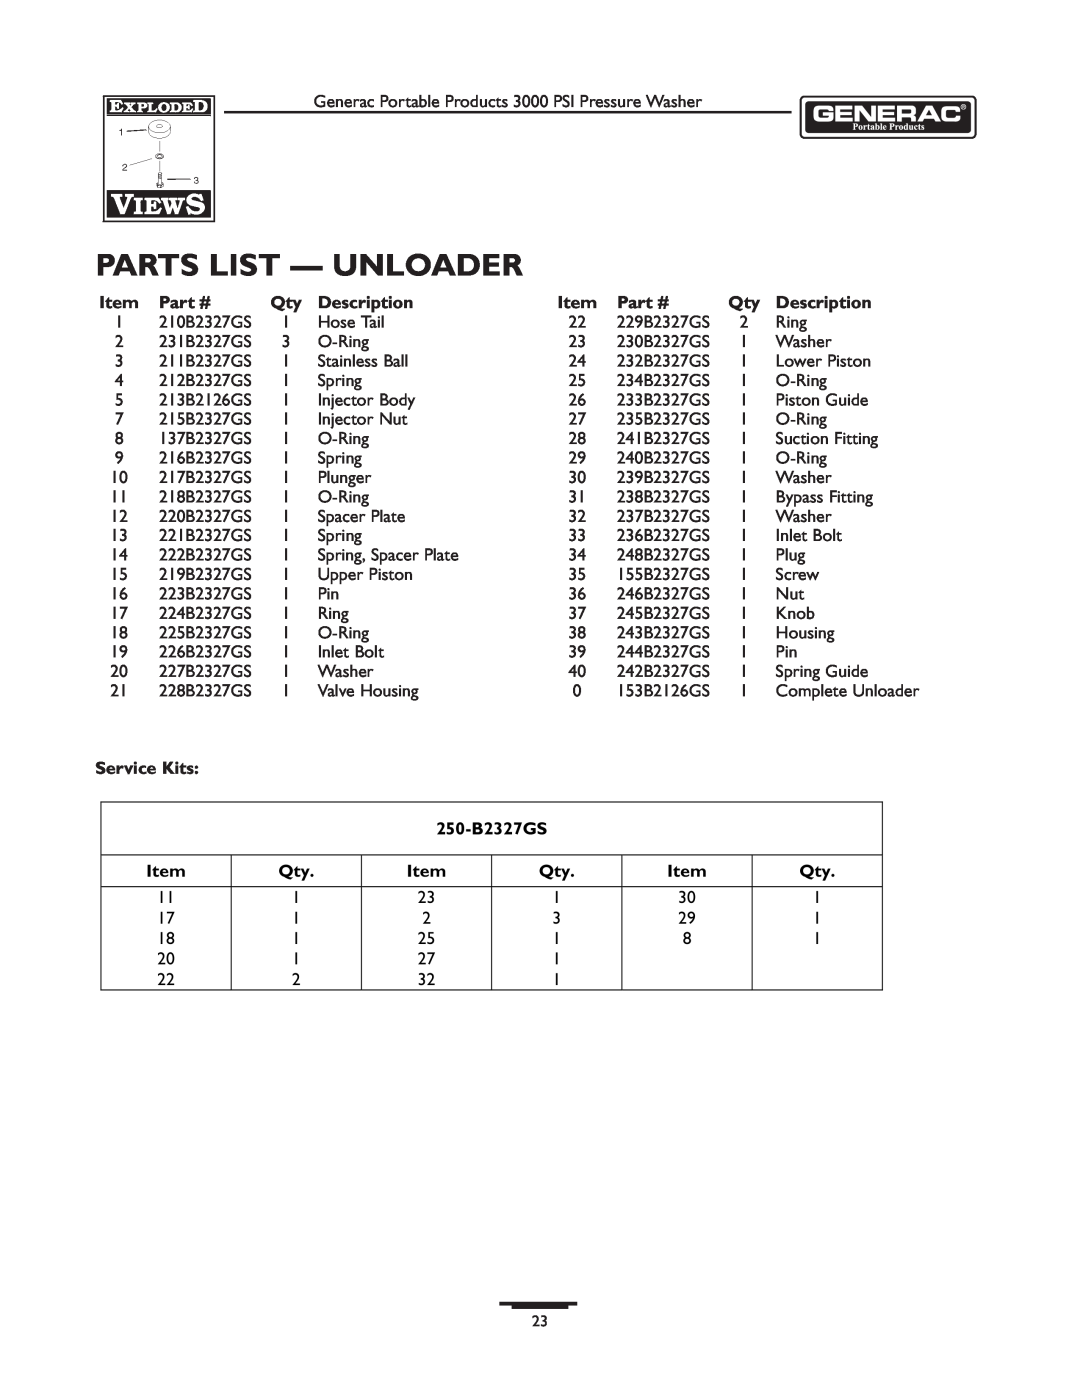 Briggs & Stratton 1418-2 owner manual Parts List - Unloader, Service Kits 250-B2327GS, Description, Complete Unloader 